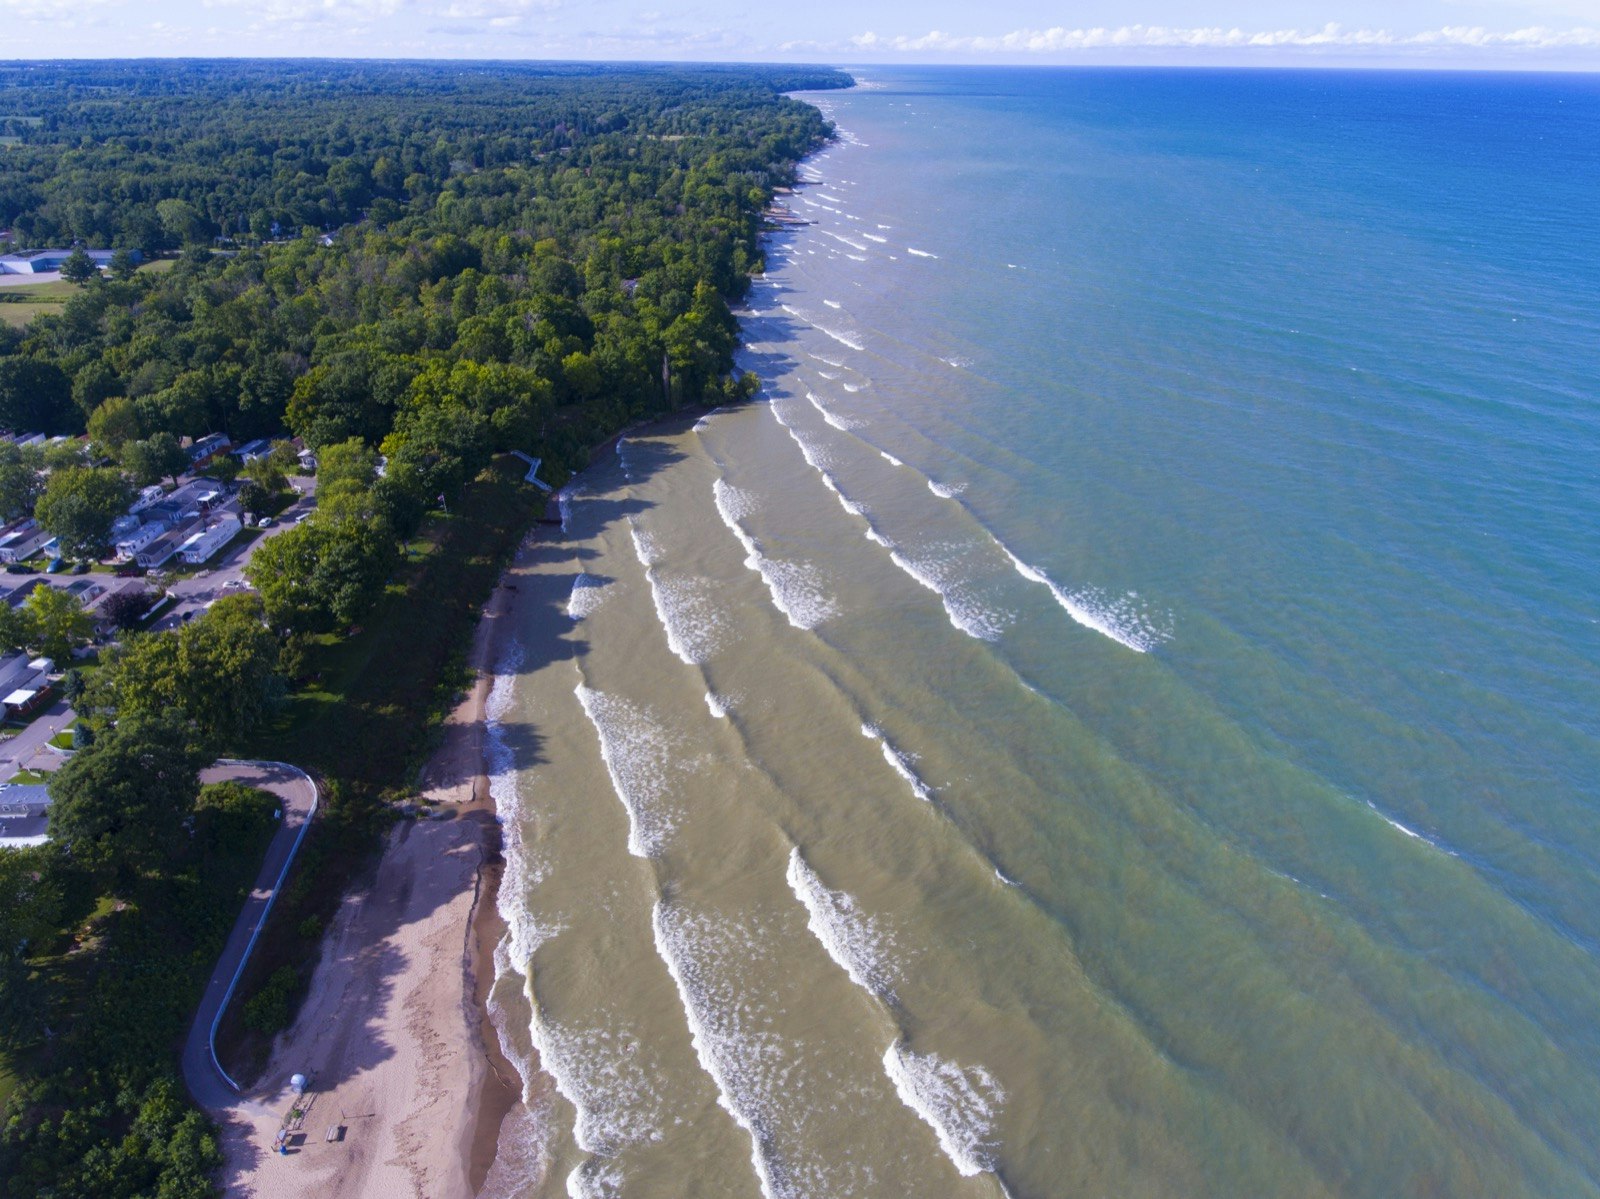 Waves lap the banks of Lake Huron; Great Lakes road trip